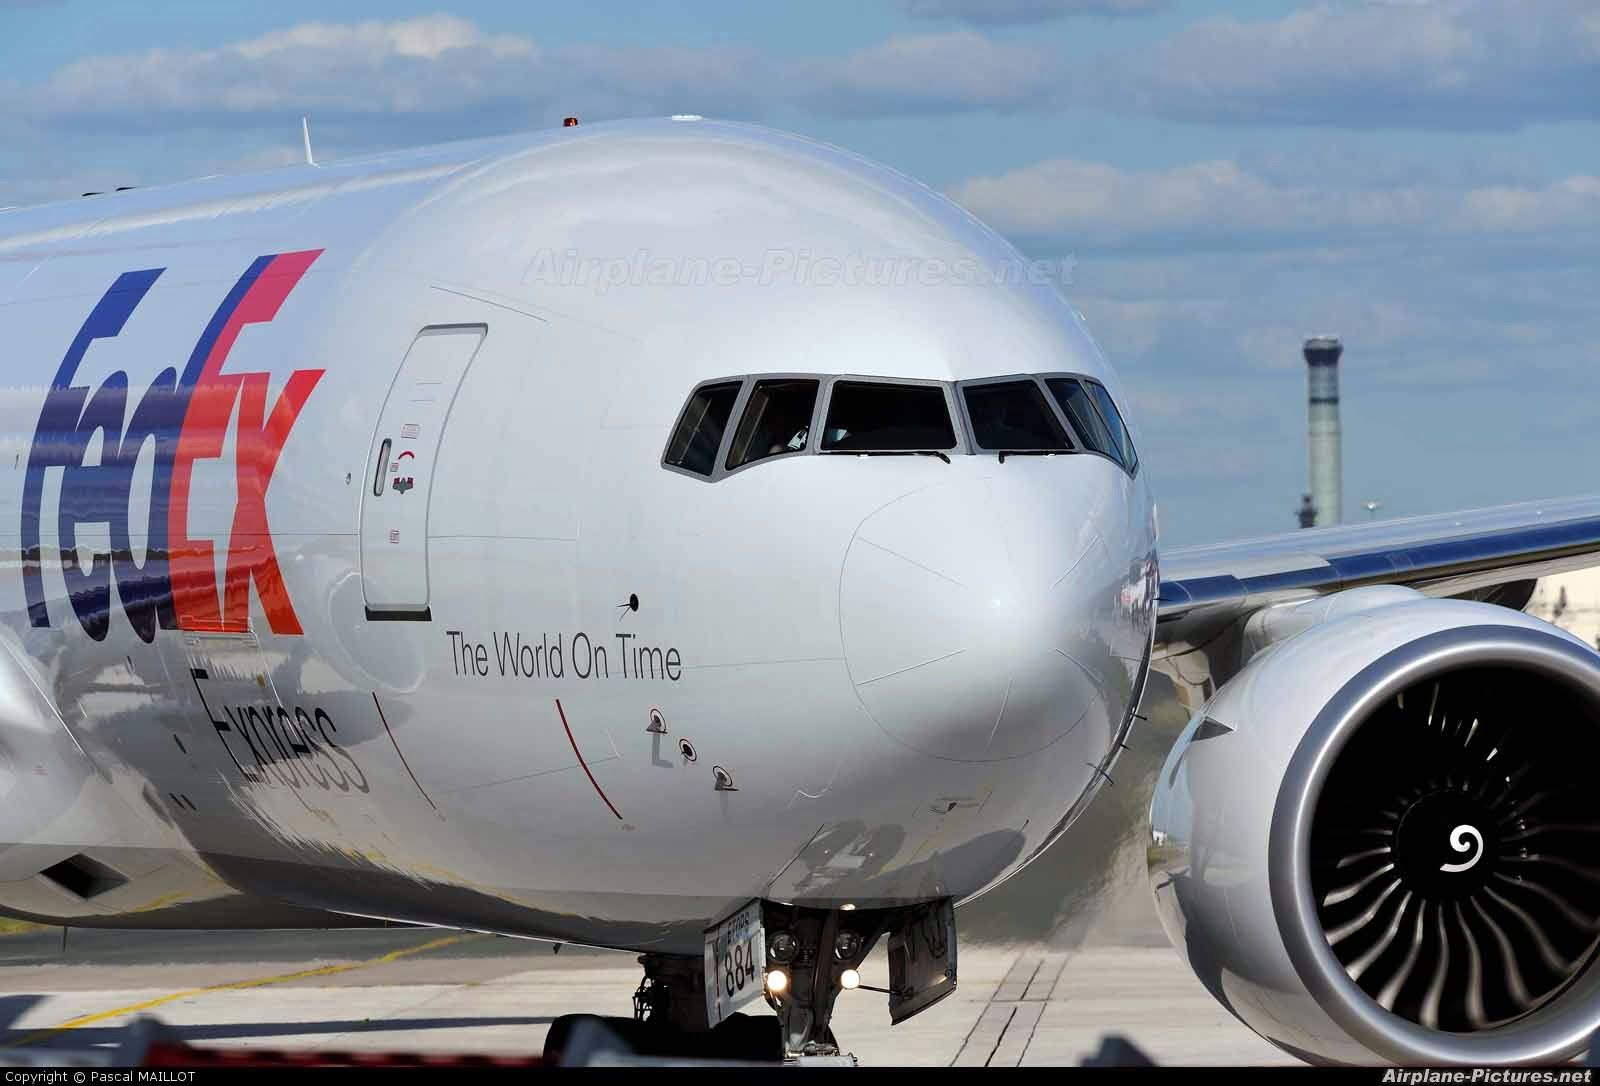 fondo de pantalla de fedex,aerolínea,aviación,avión de línea,vehículo,avión